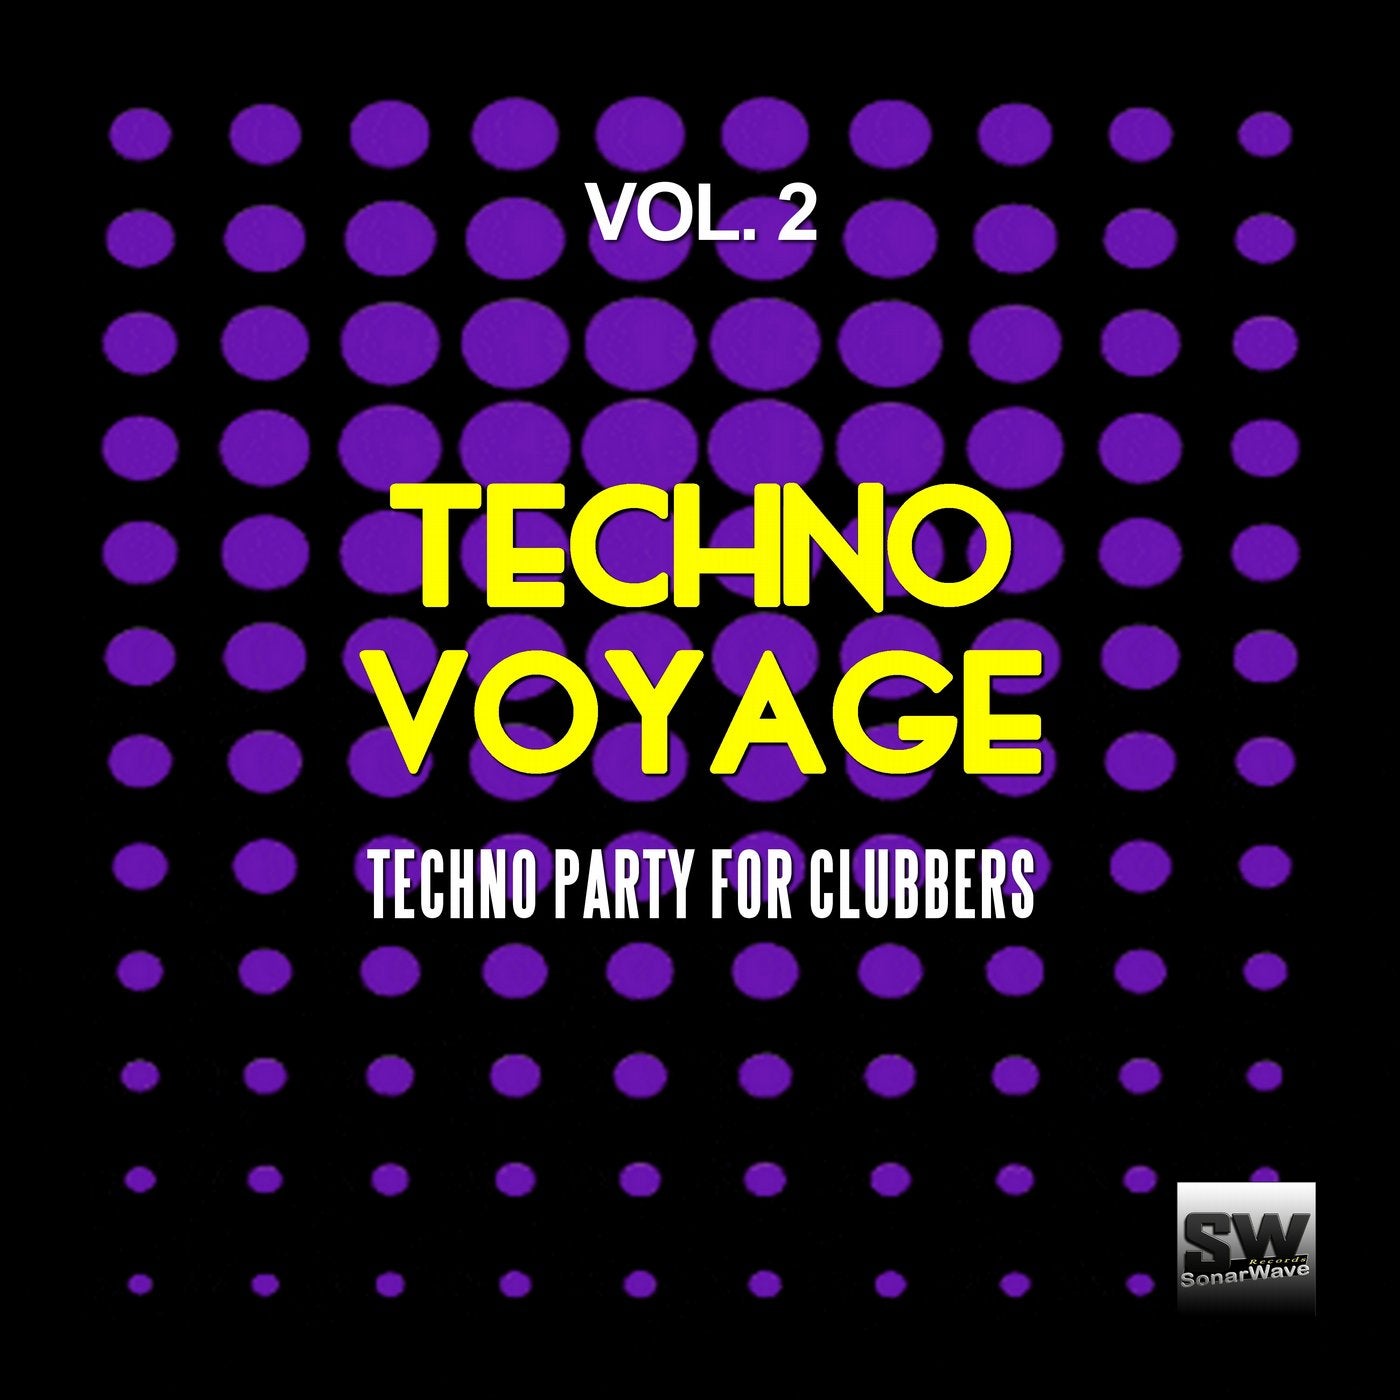 Techno Voyage, Vol. 2 (Techno Party for Clubbers)